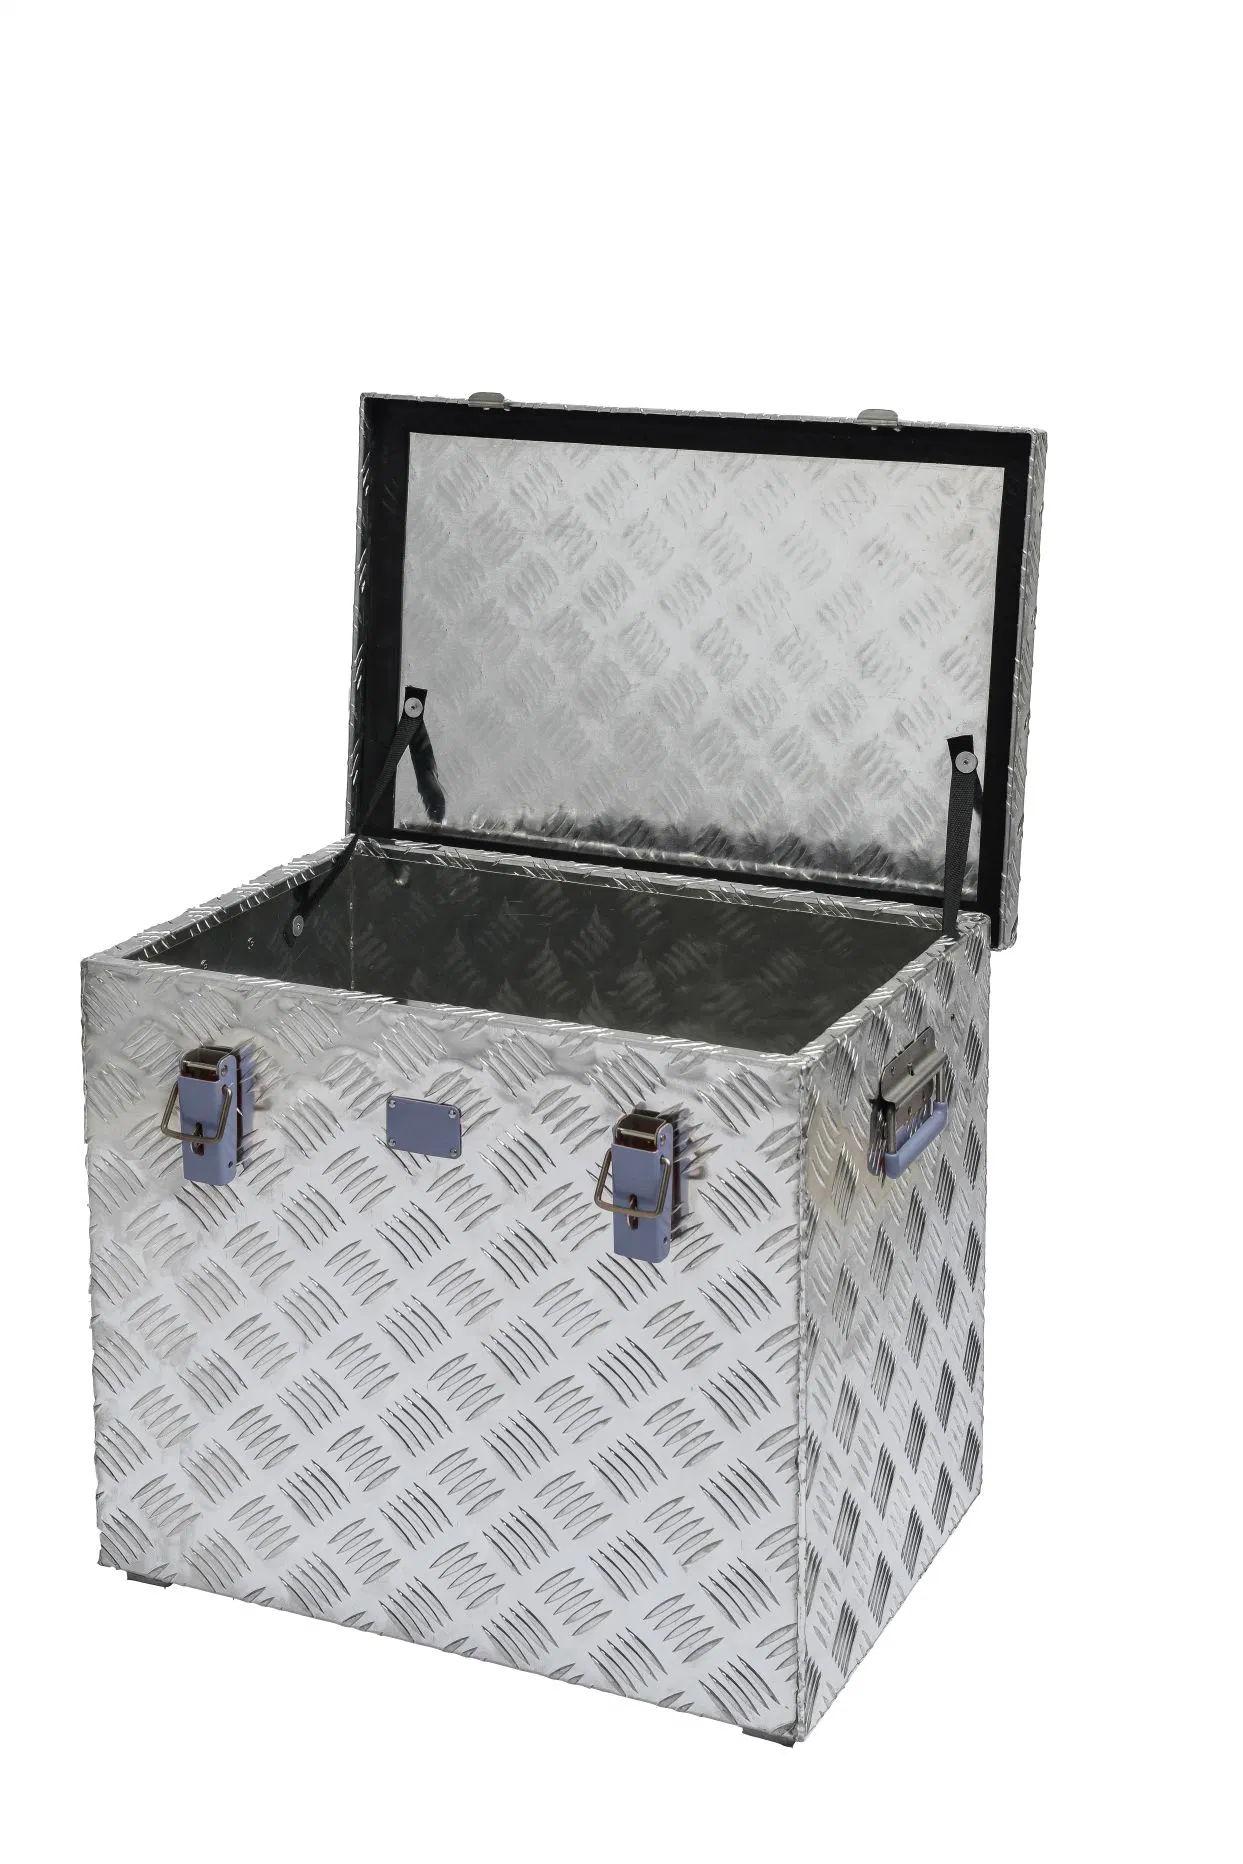 Hot Sale Aluminum Tool Box for Truck/Aluminum Side Mount